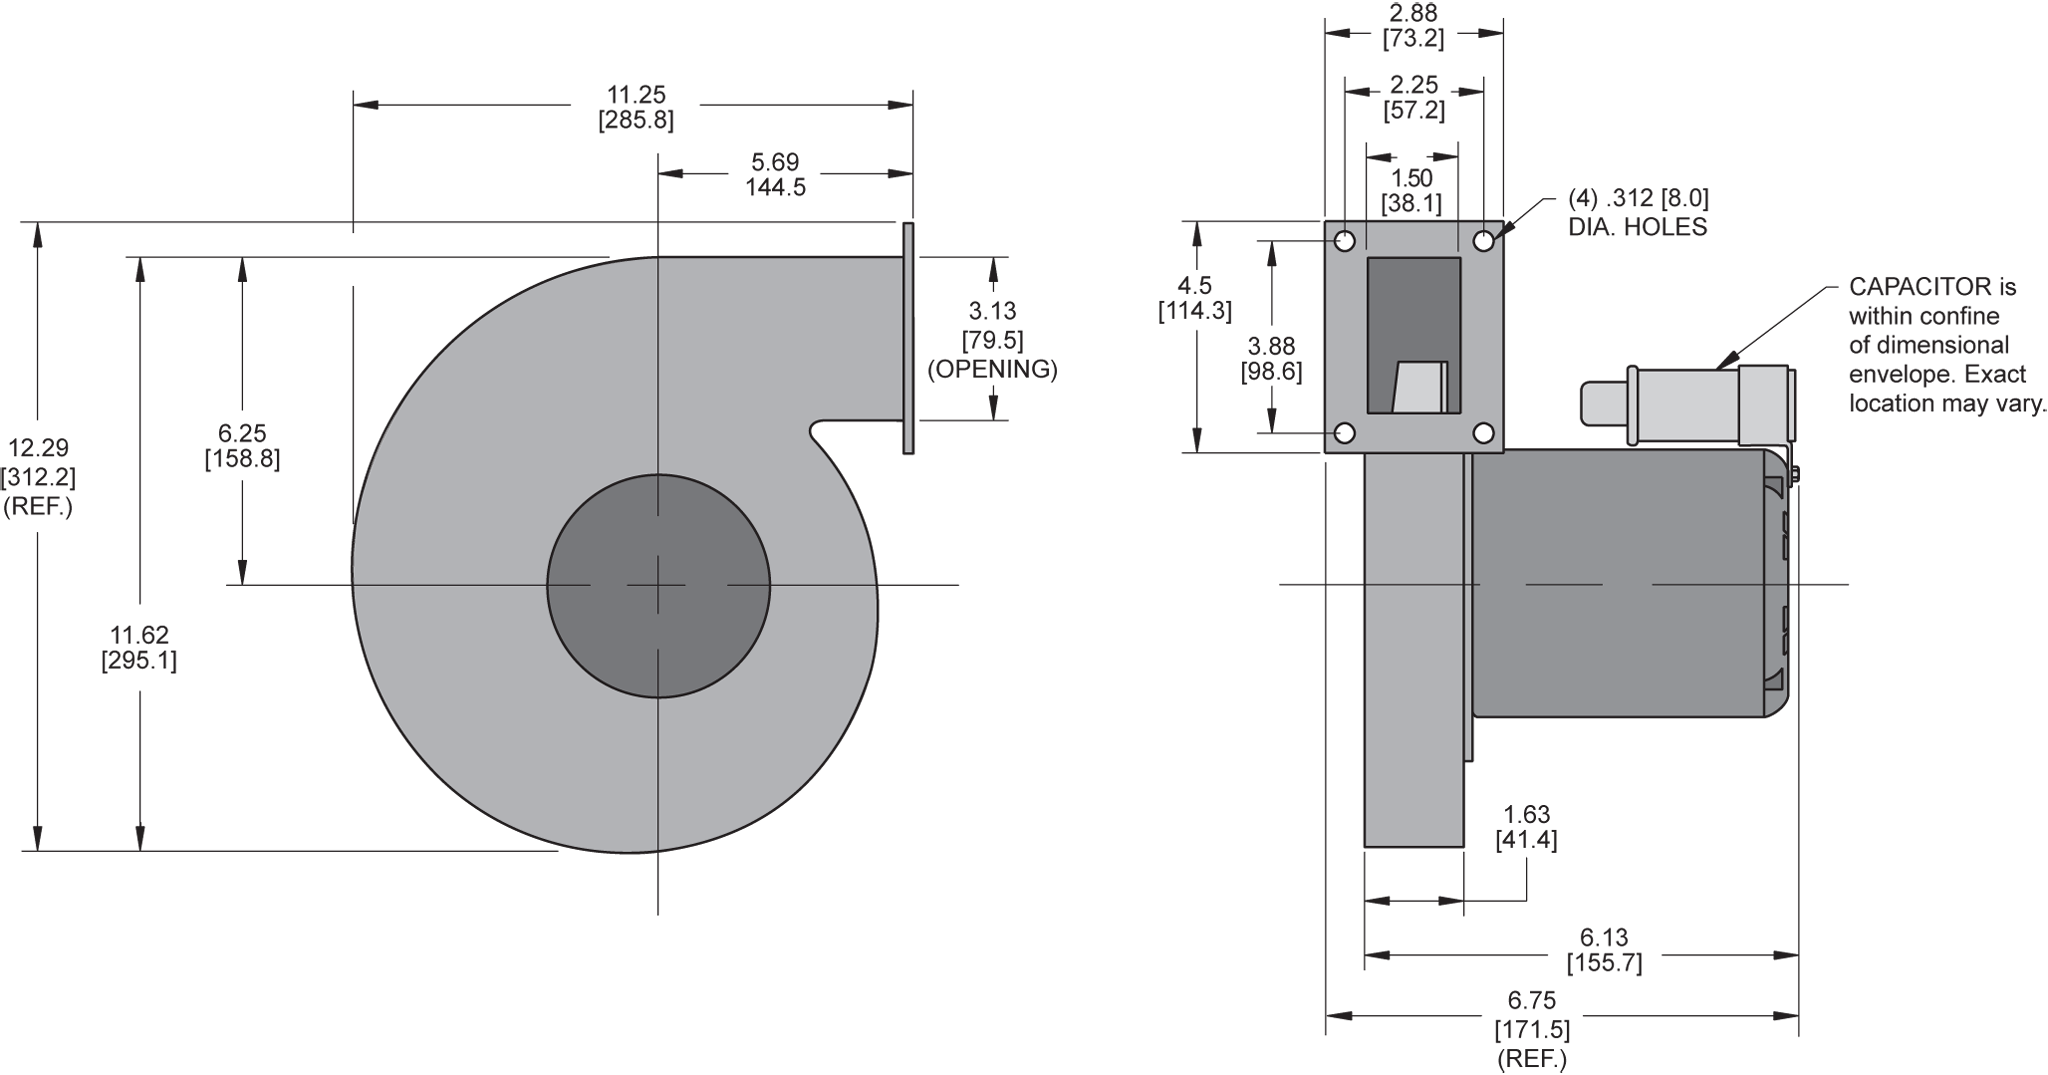 KBR90 Radial Blower general arrangement drawing